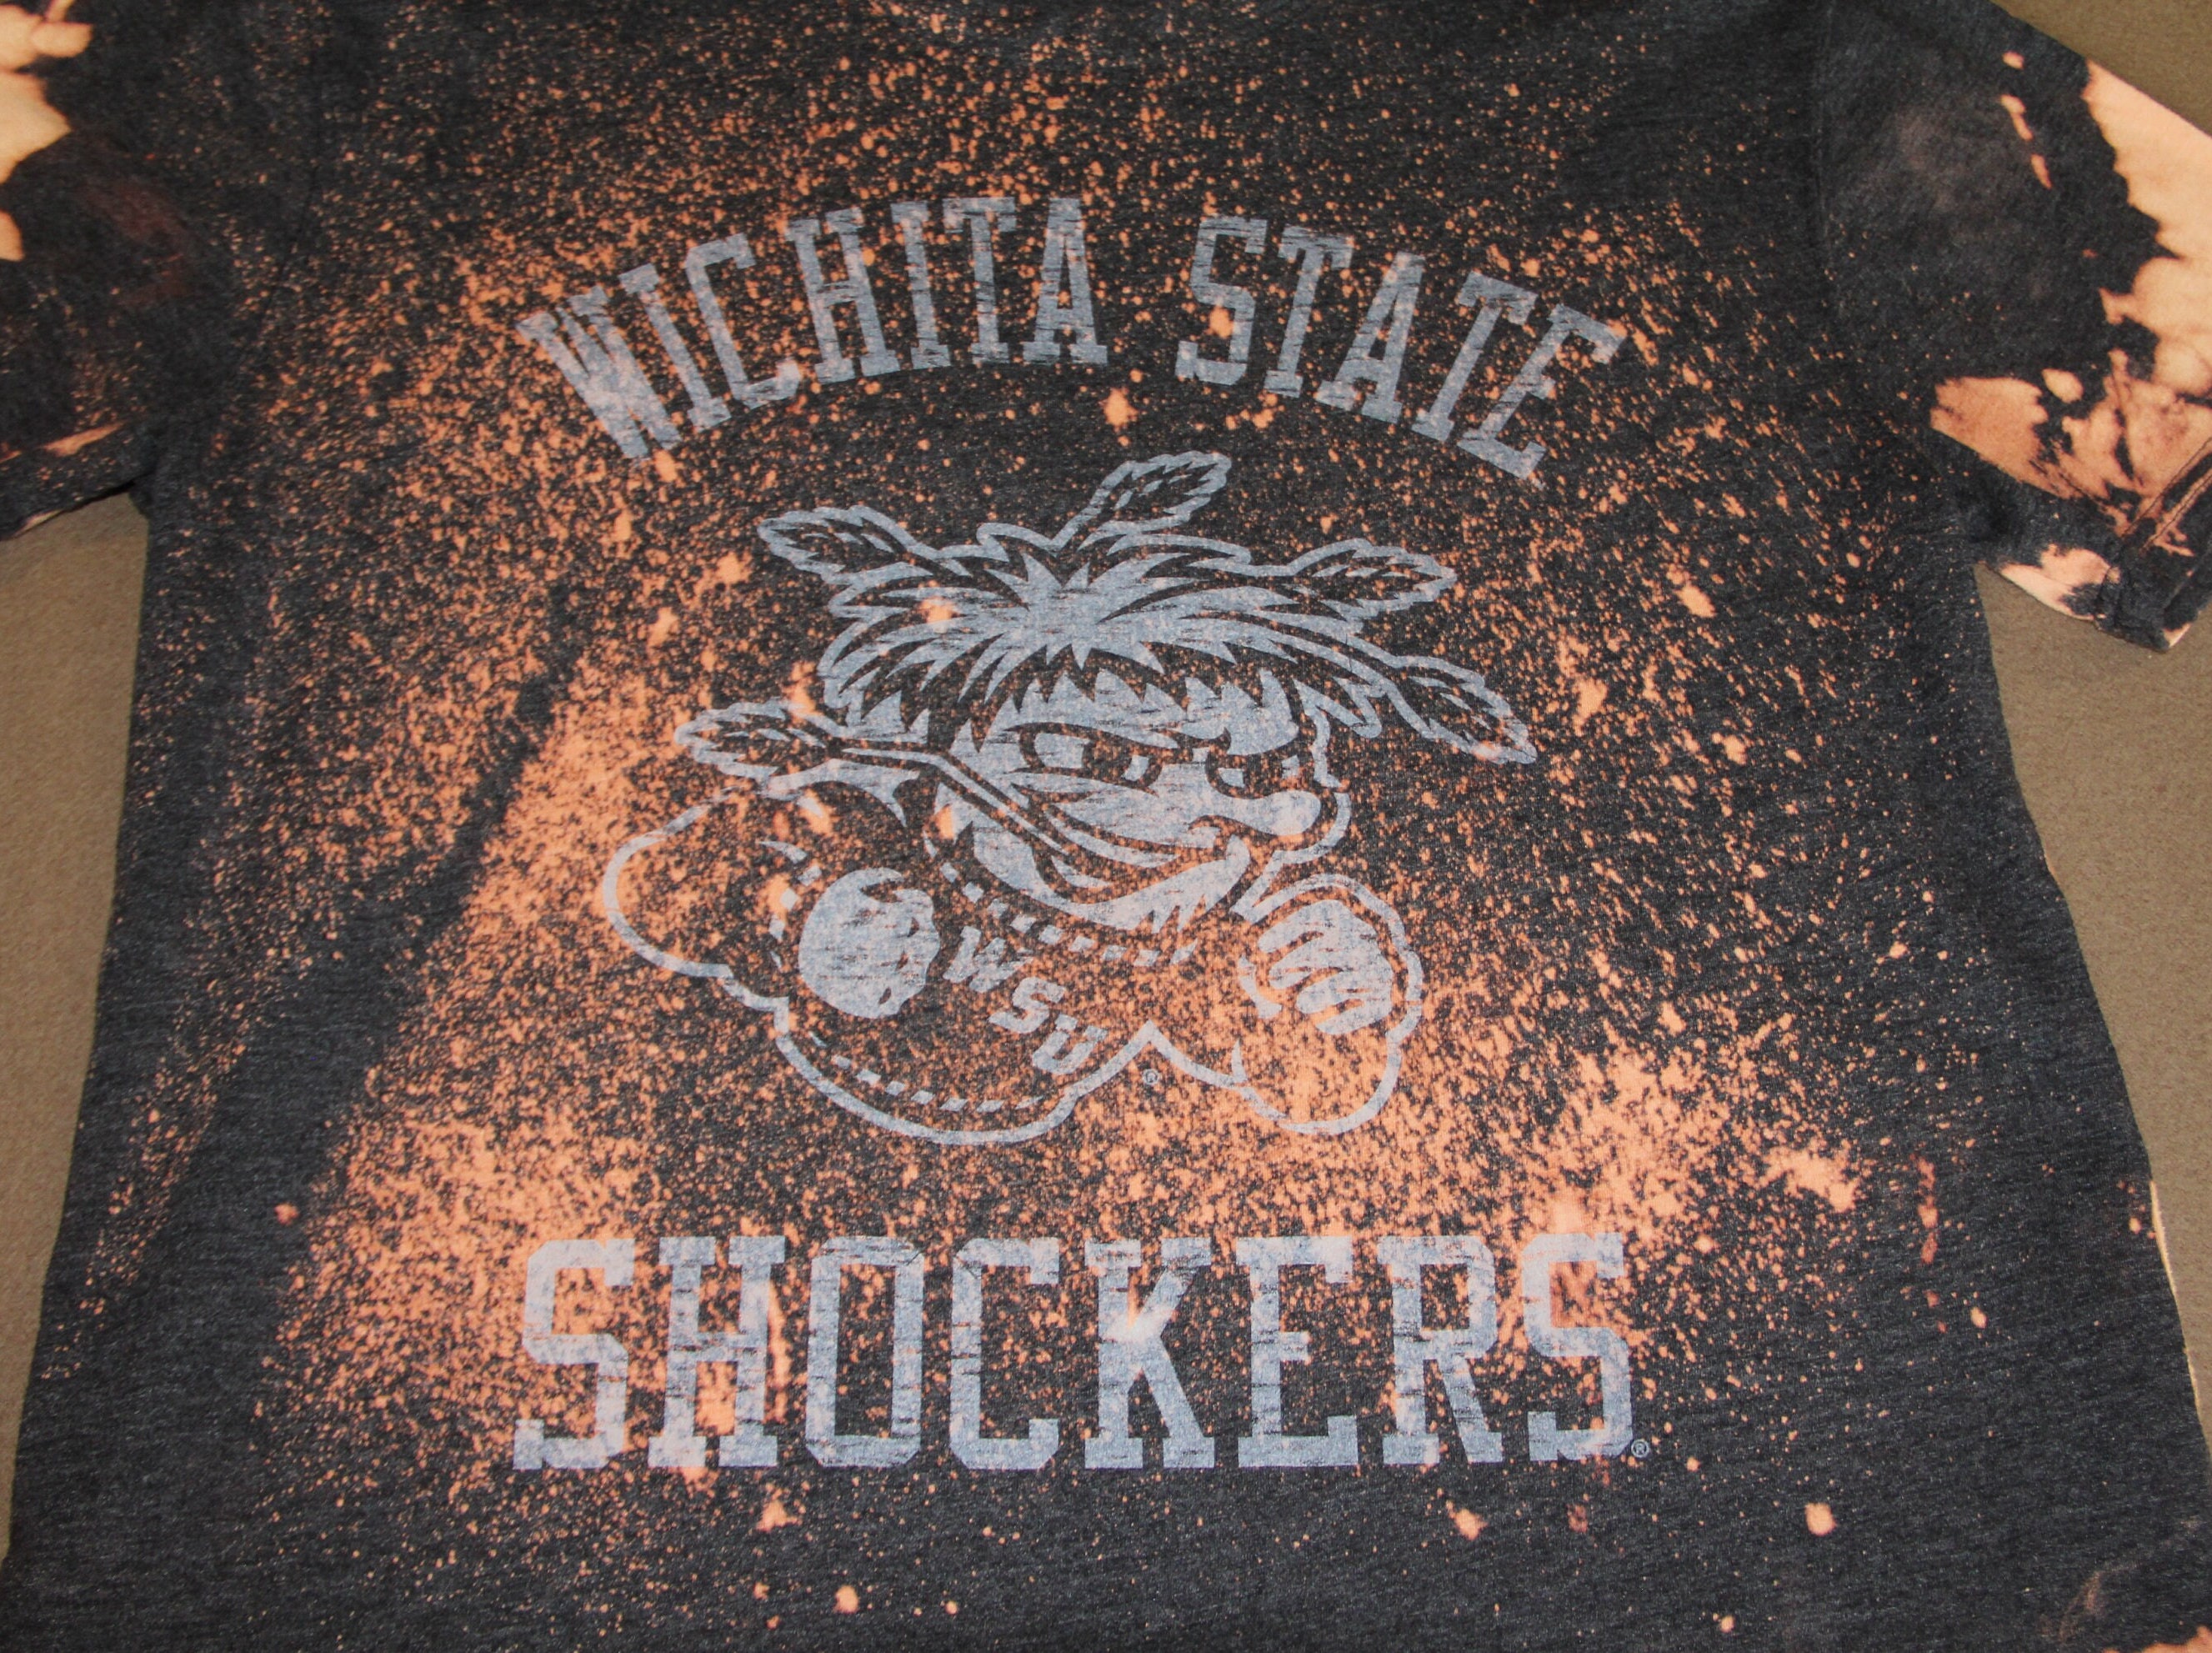 Wichita State Shockers Tee Shirt - Wu Shock Shockers